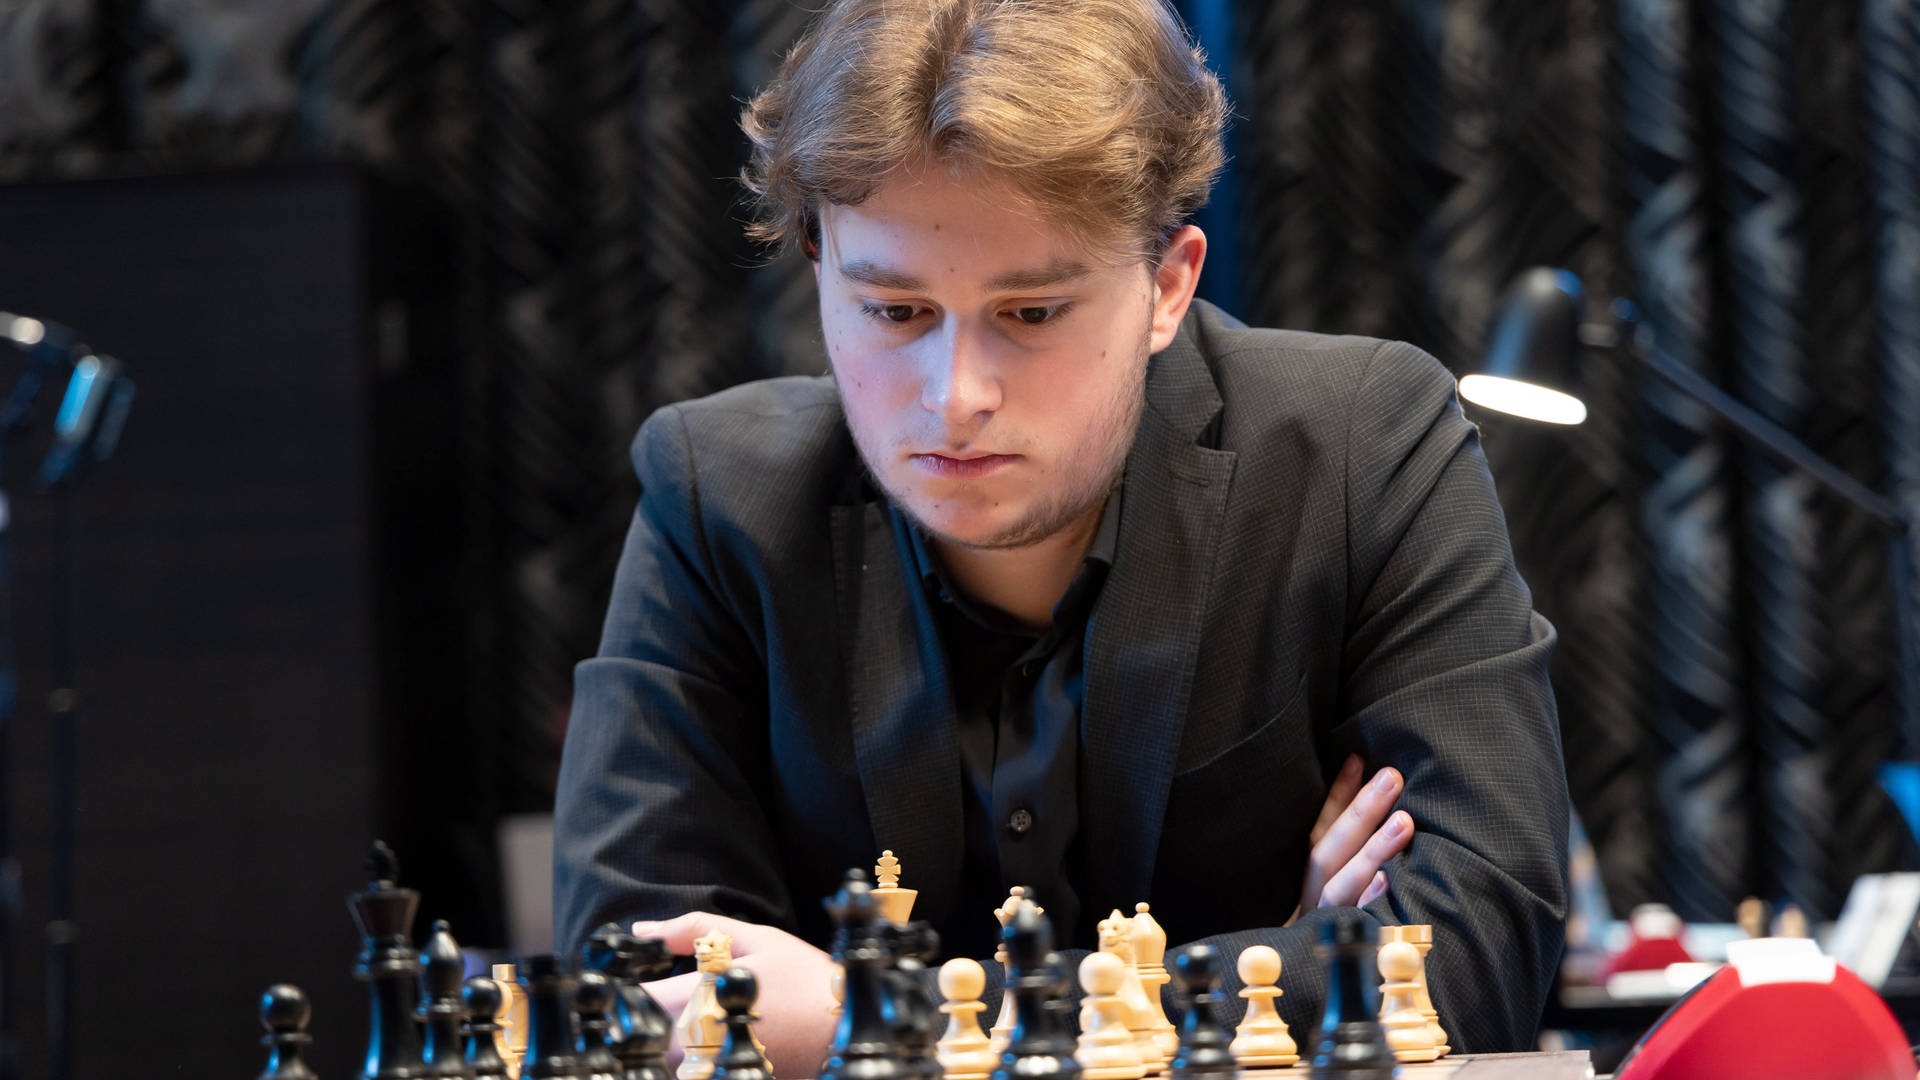 Schach-Talent Vincent Keymer gegen Magnus Carlsen ausgeschieden